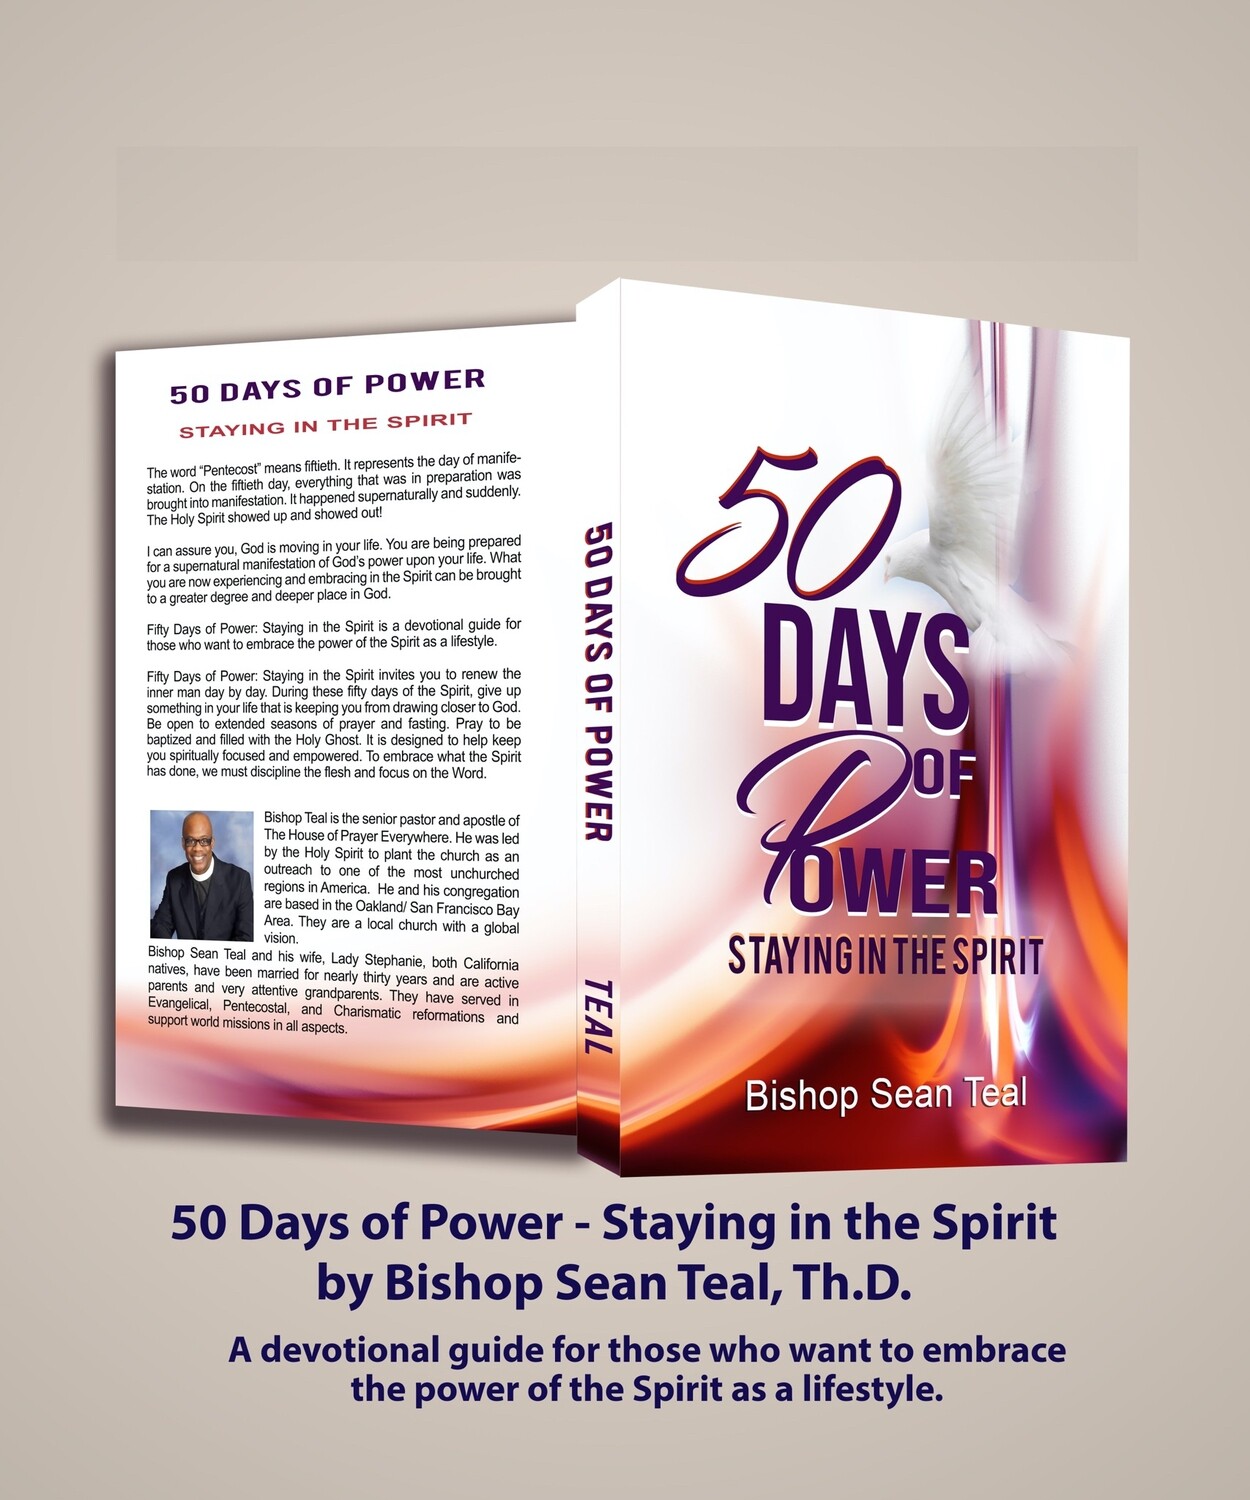 50 Days of Power